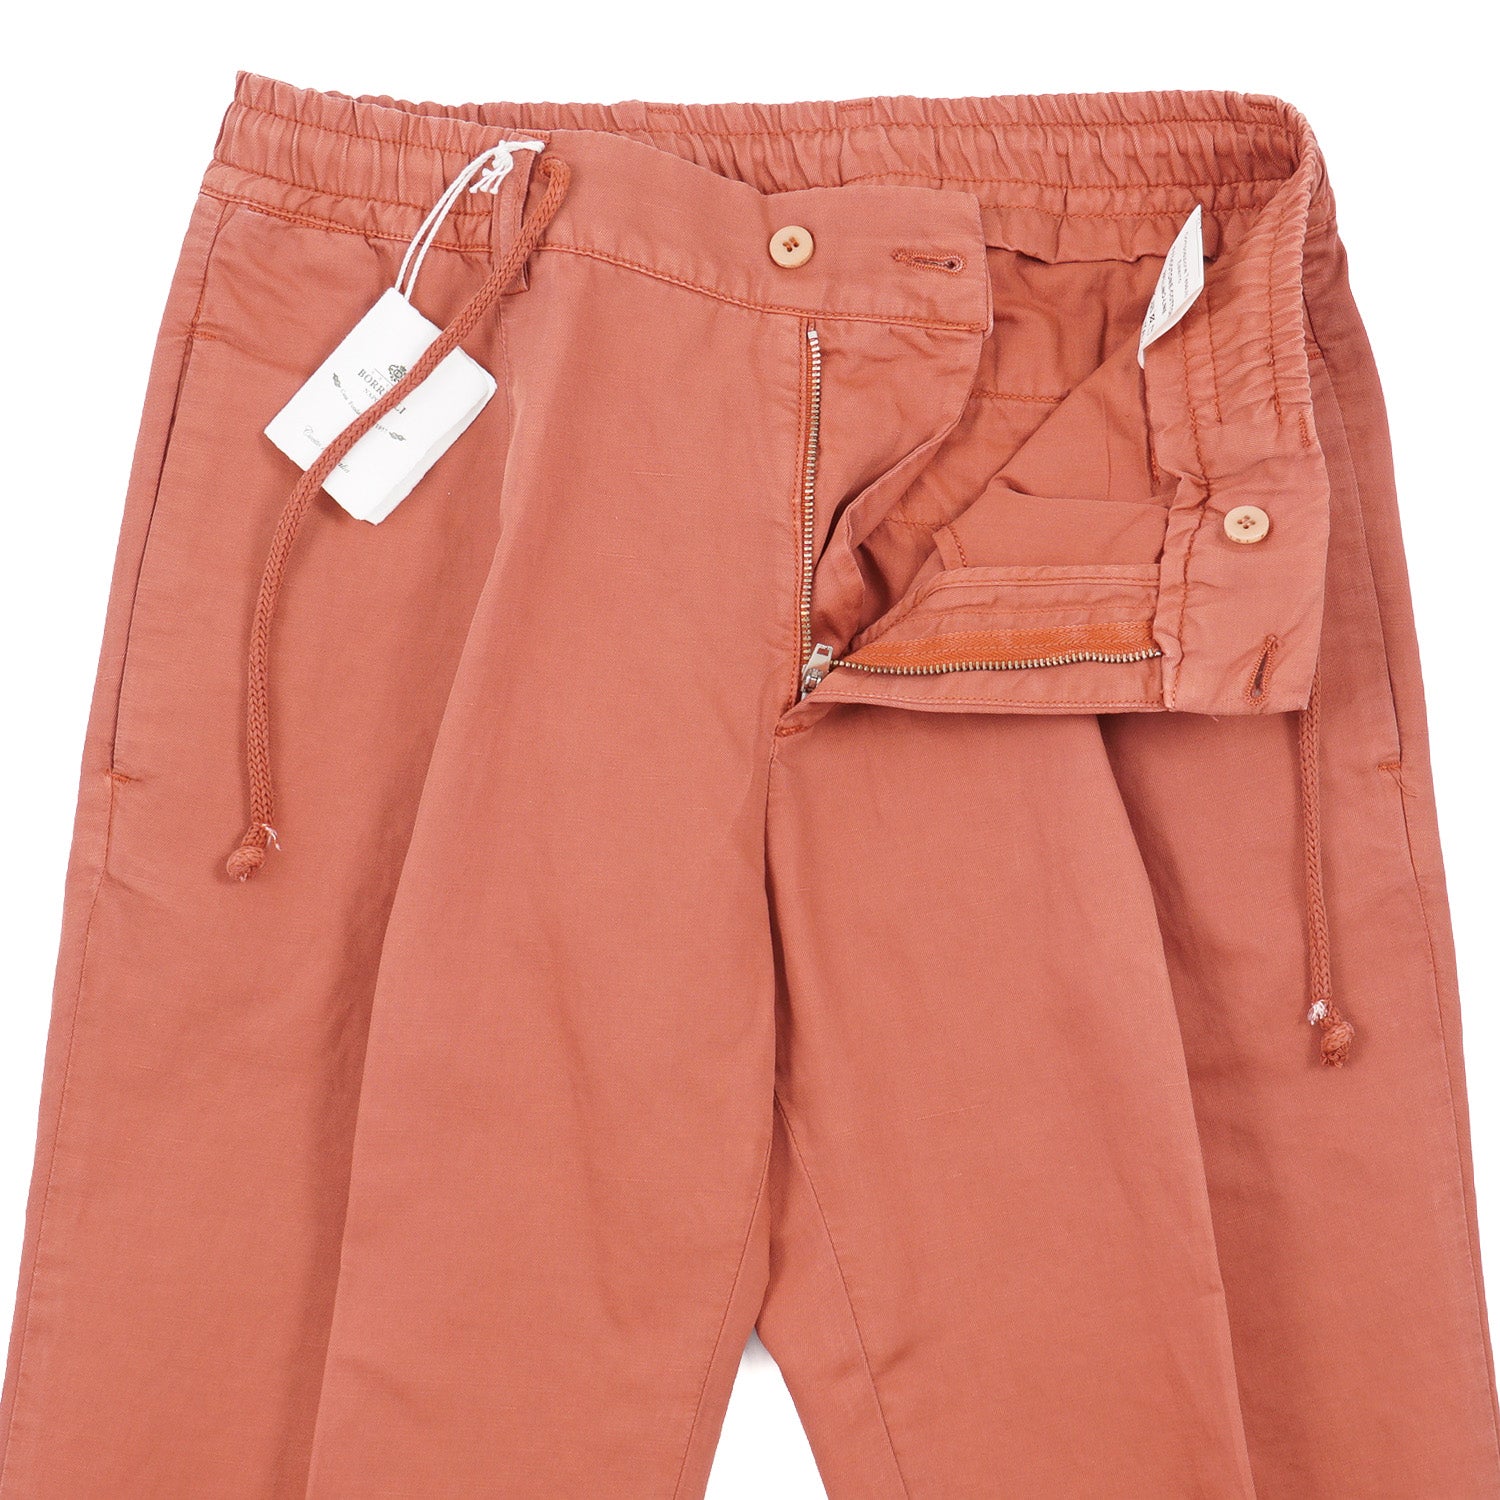 Luigi Borrelli Cotton-Linen Summer Pants - Top Shelf Apparel